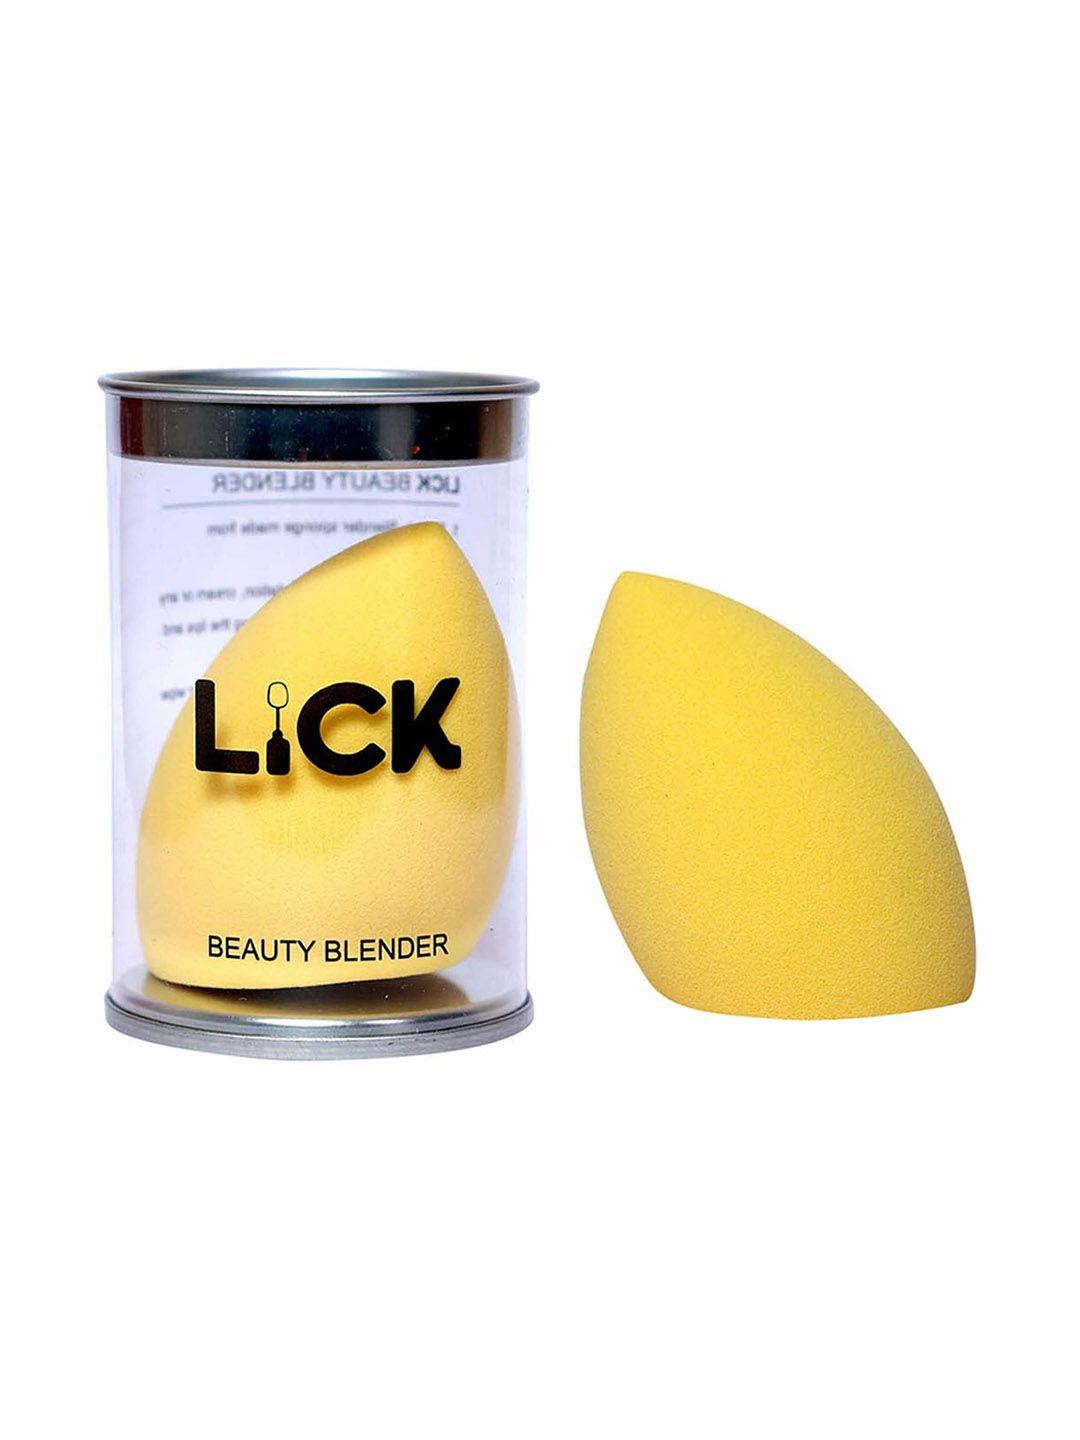 lick beauty blender sponge - yellow